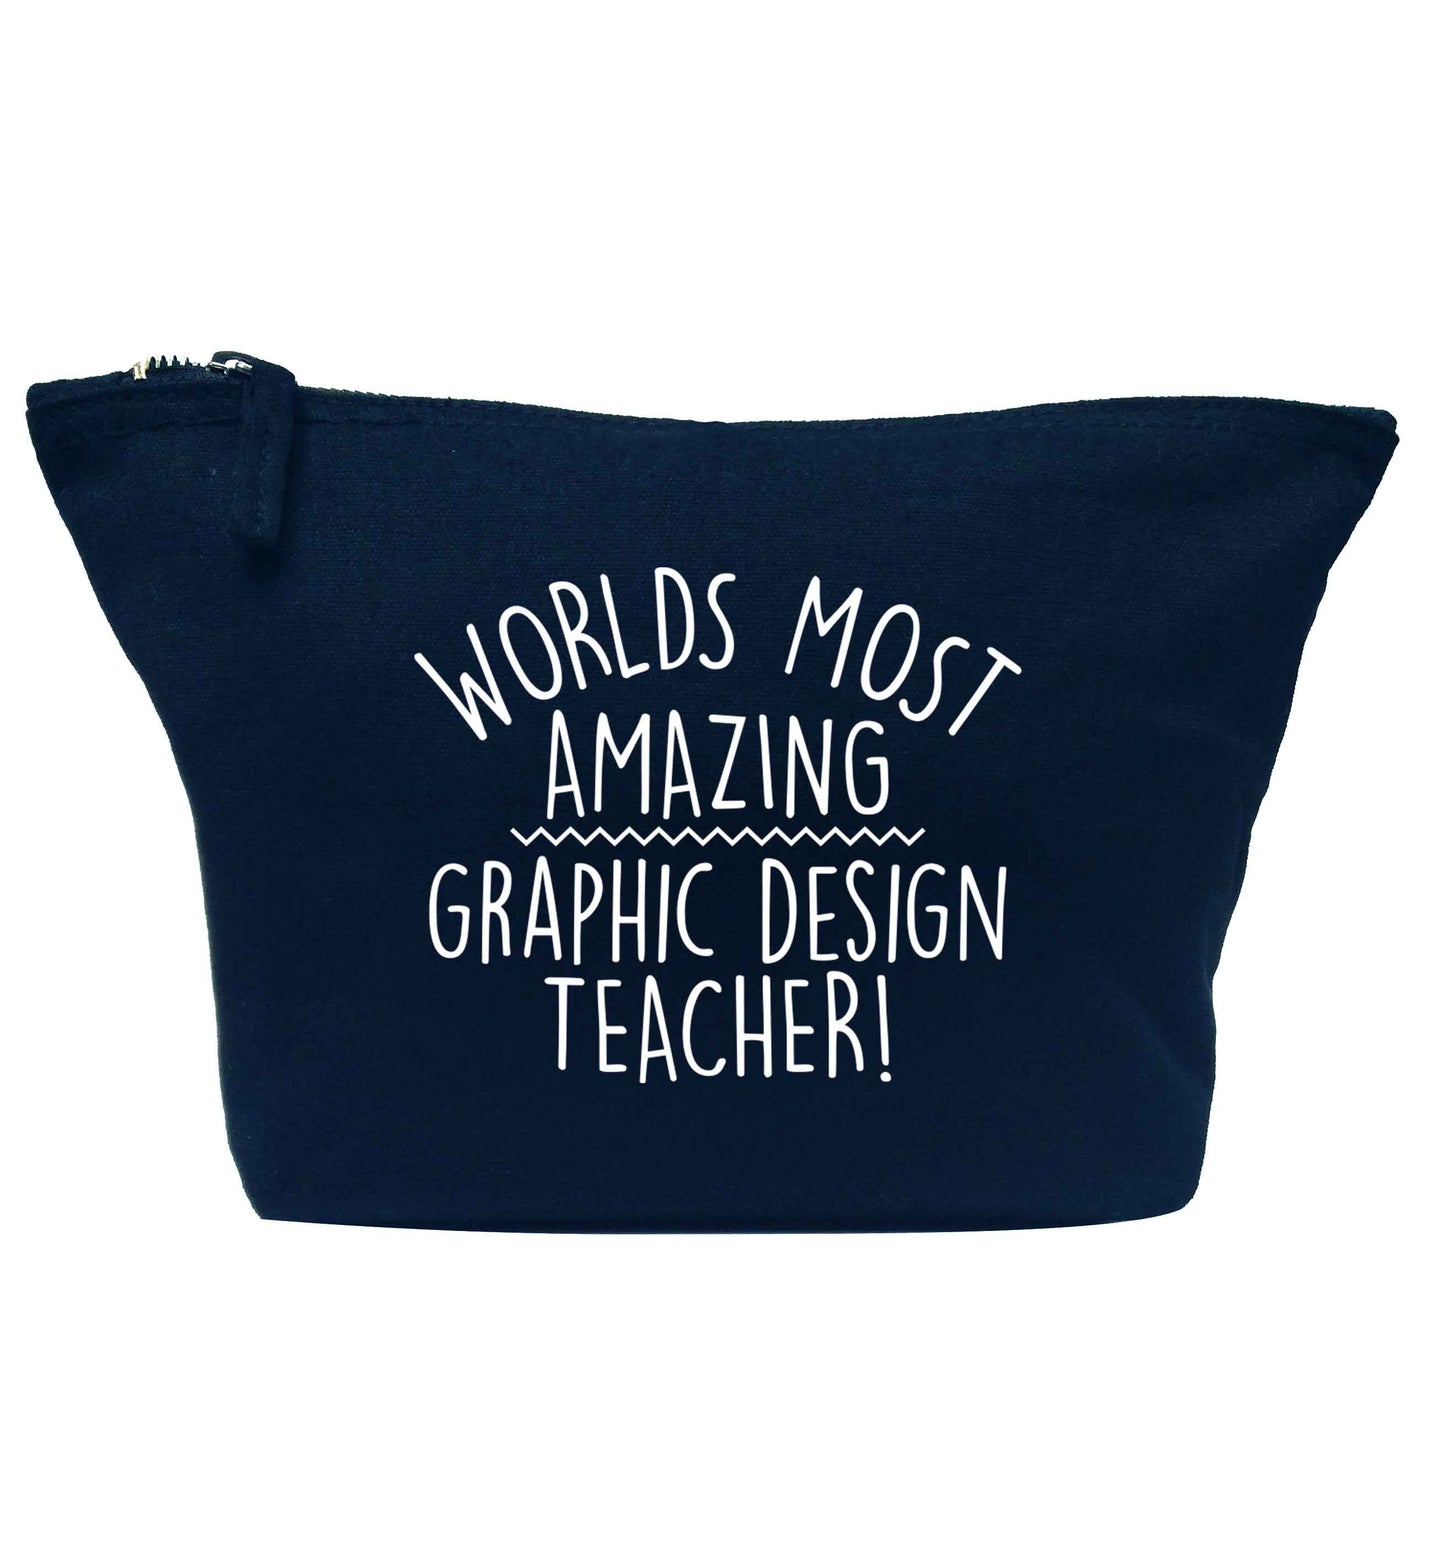 Worlds most amazing graphic design teacher navy makeup bag